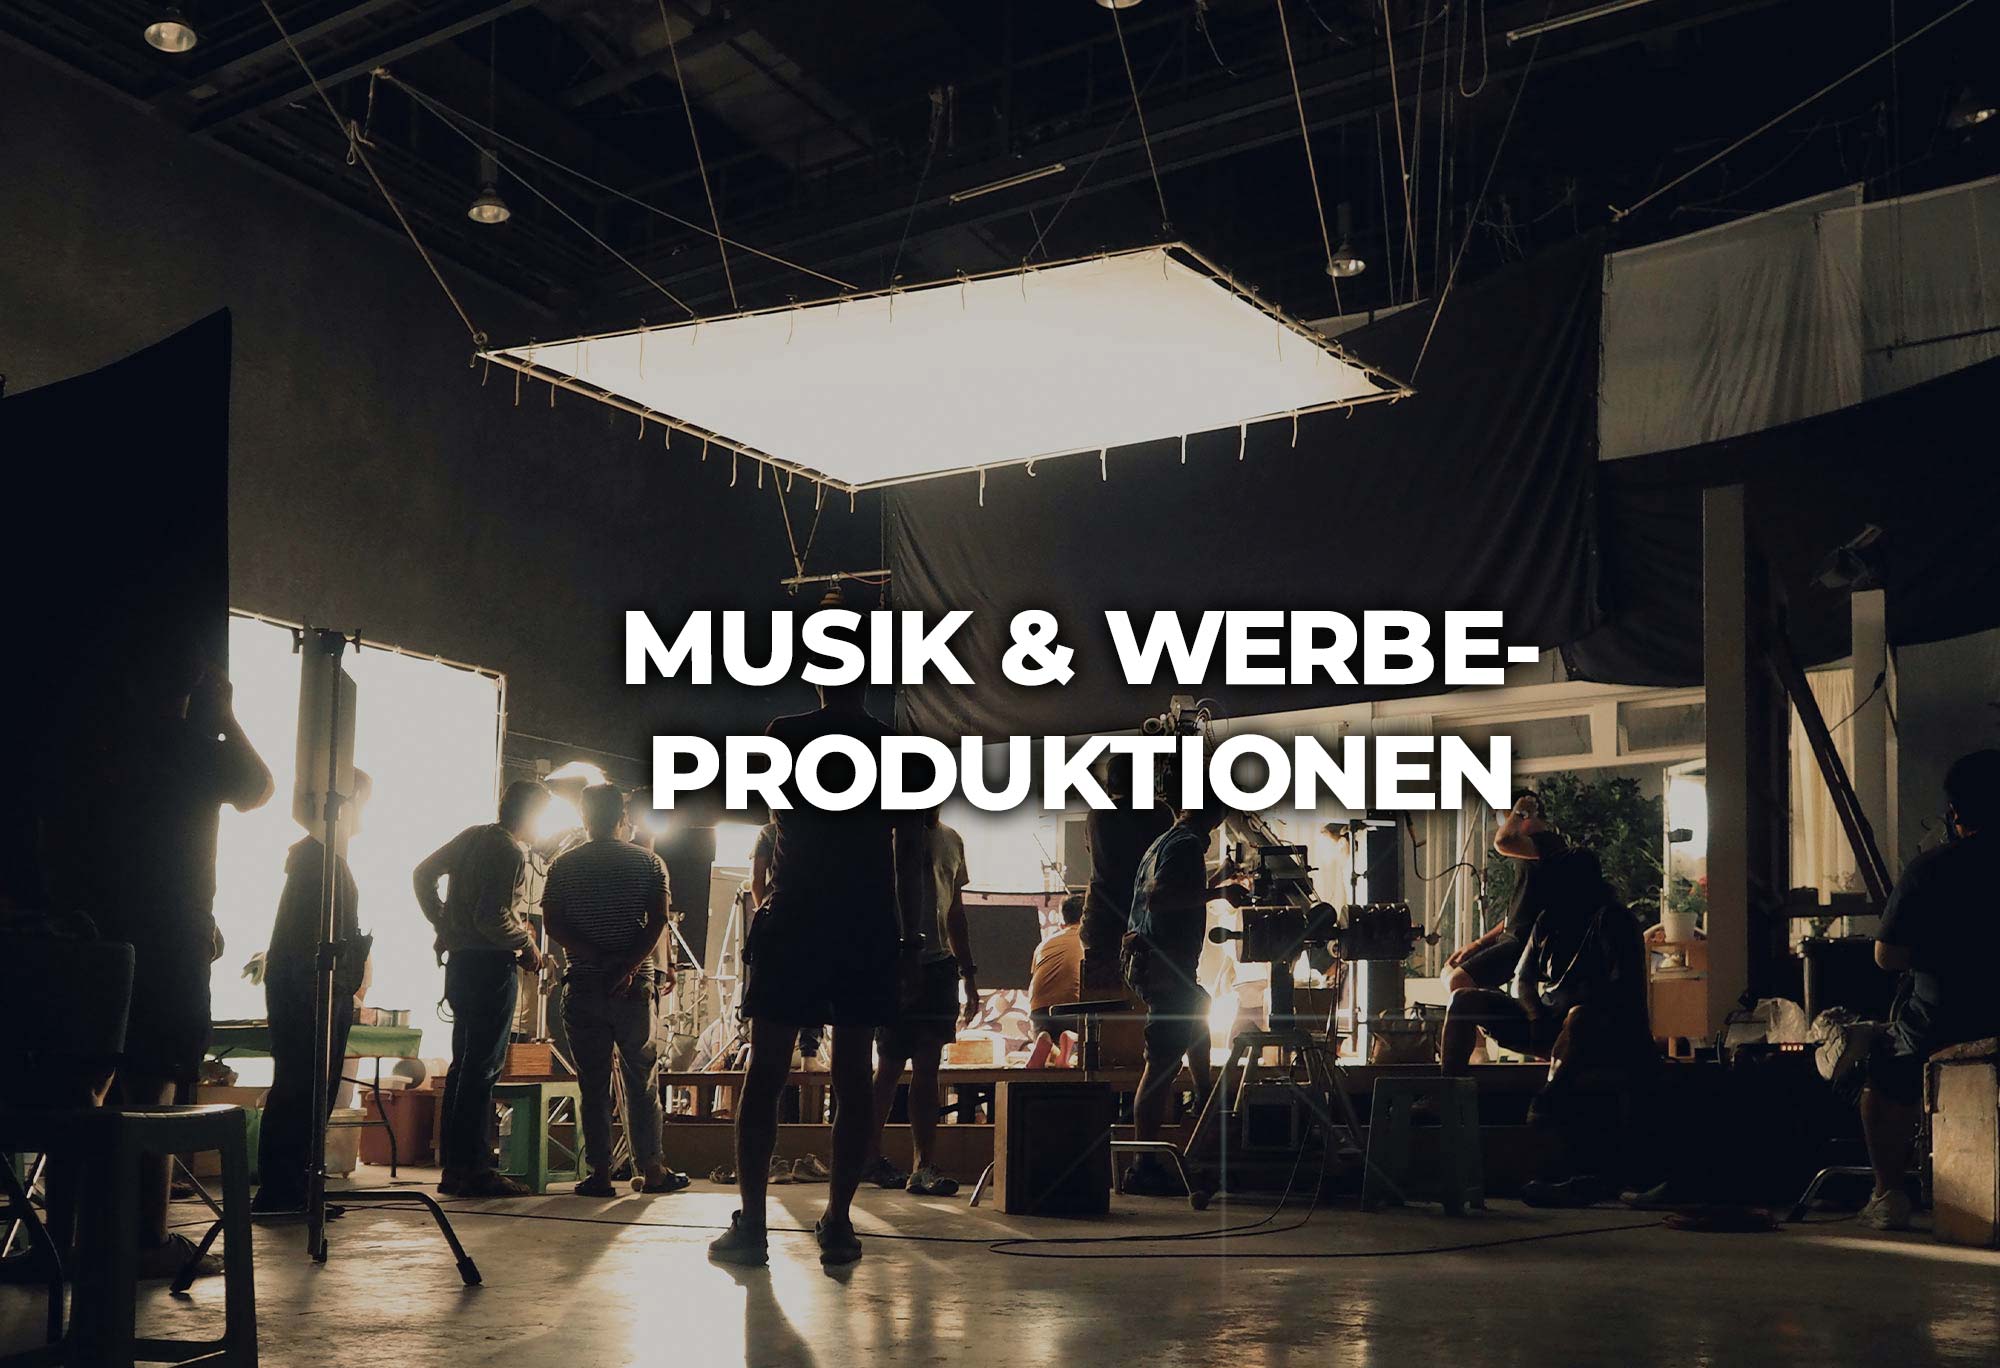 werbefilm-musik-video-pre-rpdoudktion-image-film-imagefilm-content-social-media-werbung-teaser-kino-werbung-trailer